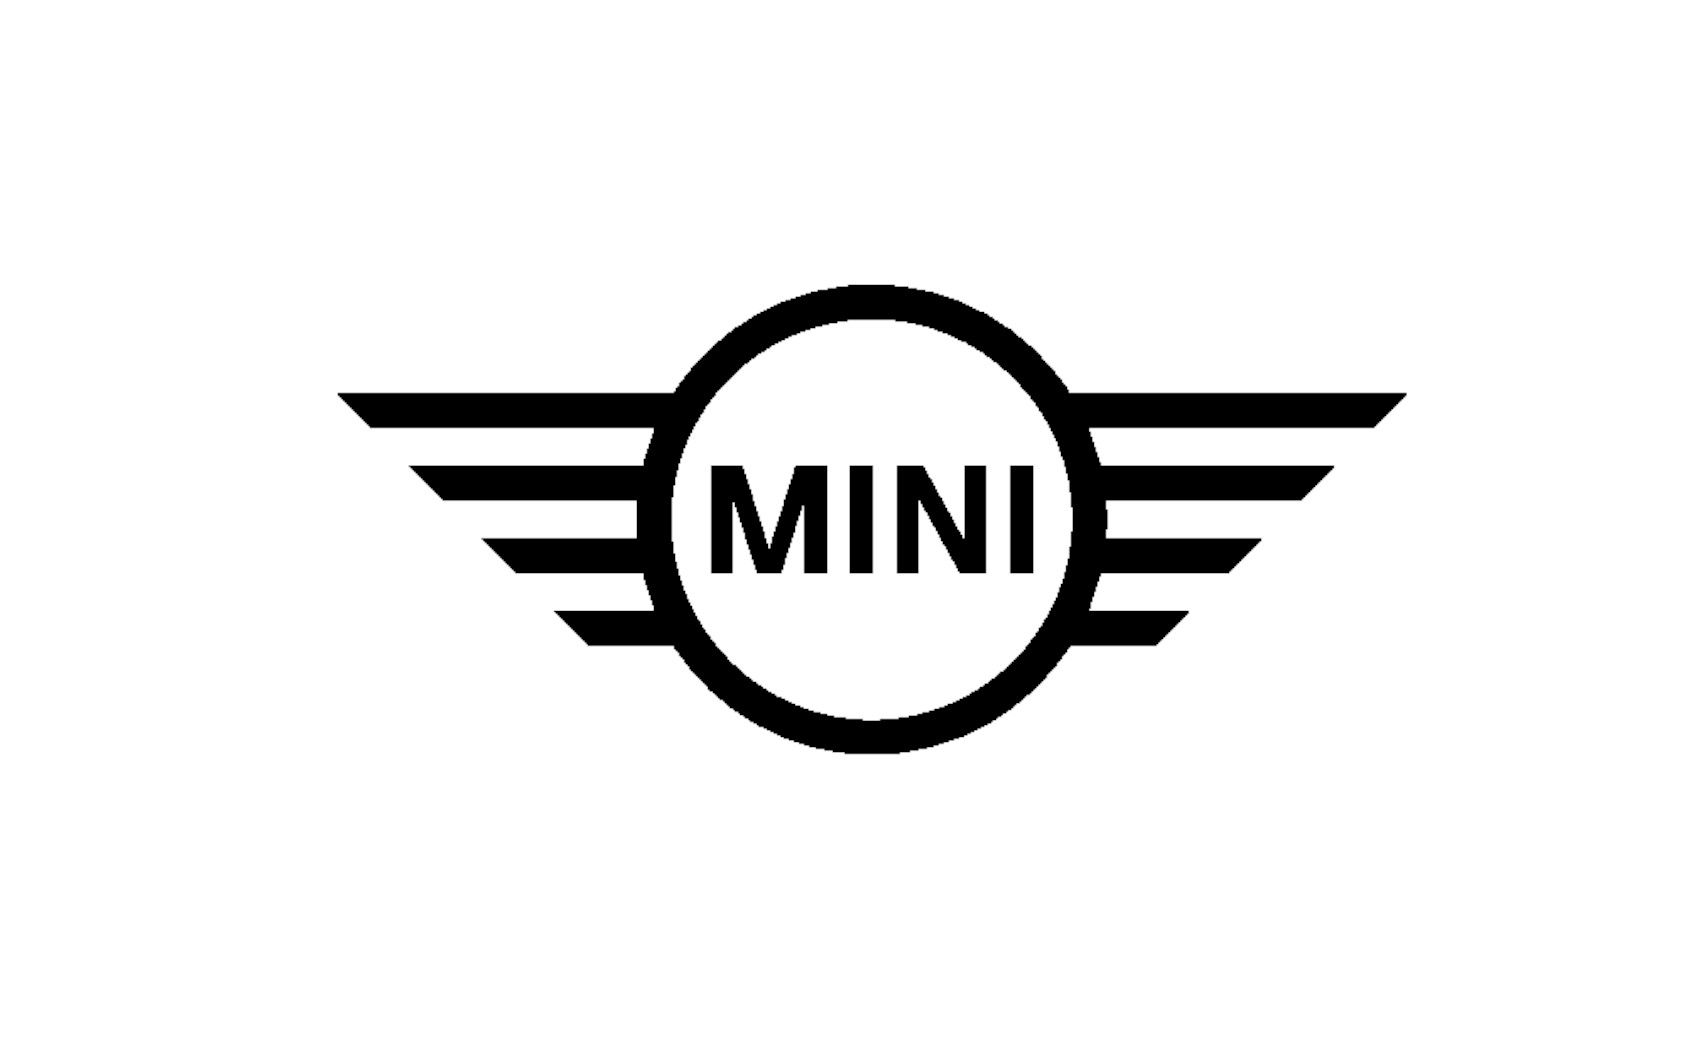 MINI Logo